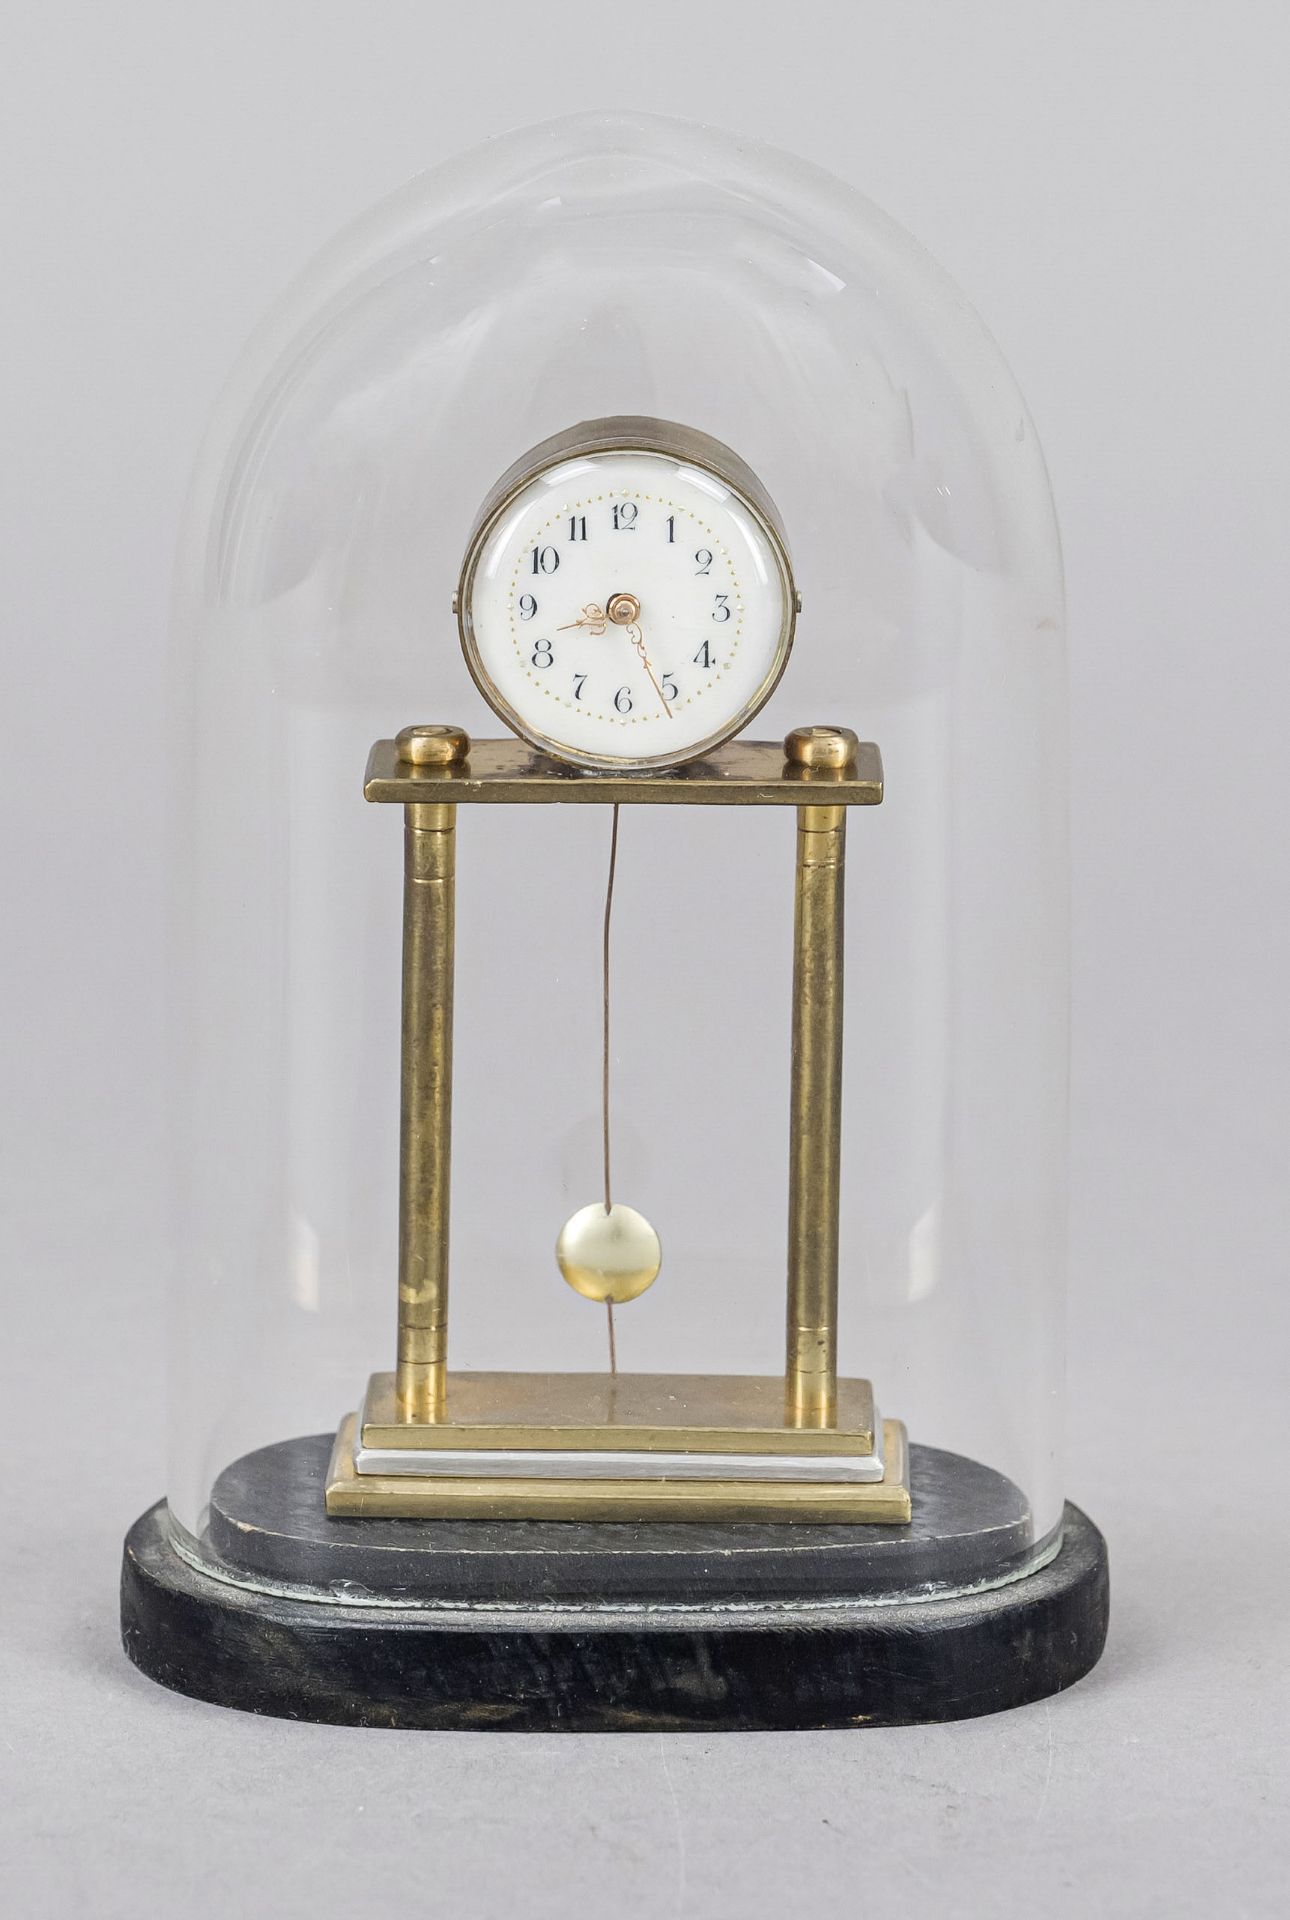 Miniature portal clock, brass, under oval glass dome on ebonized base, 20th century, white enamel